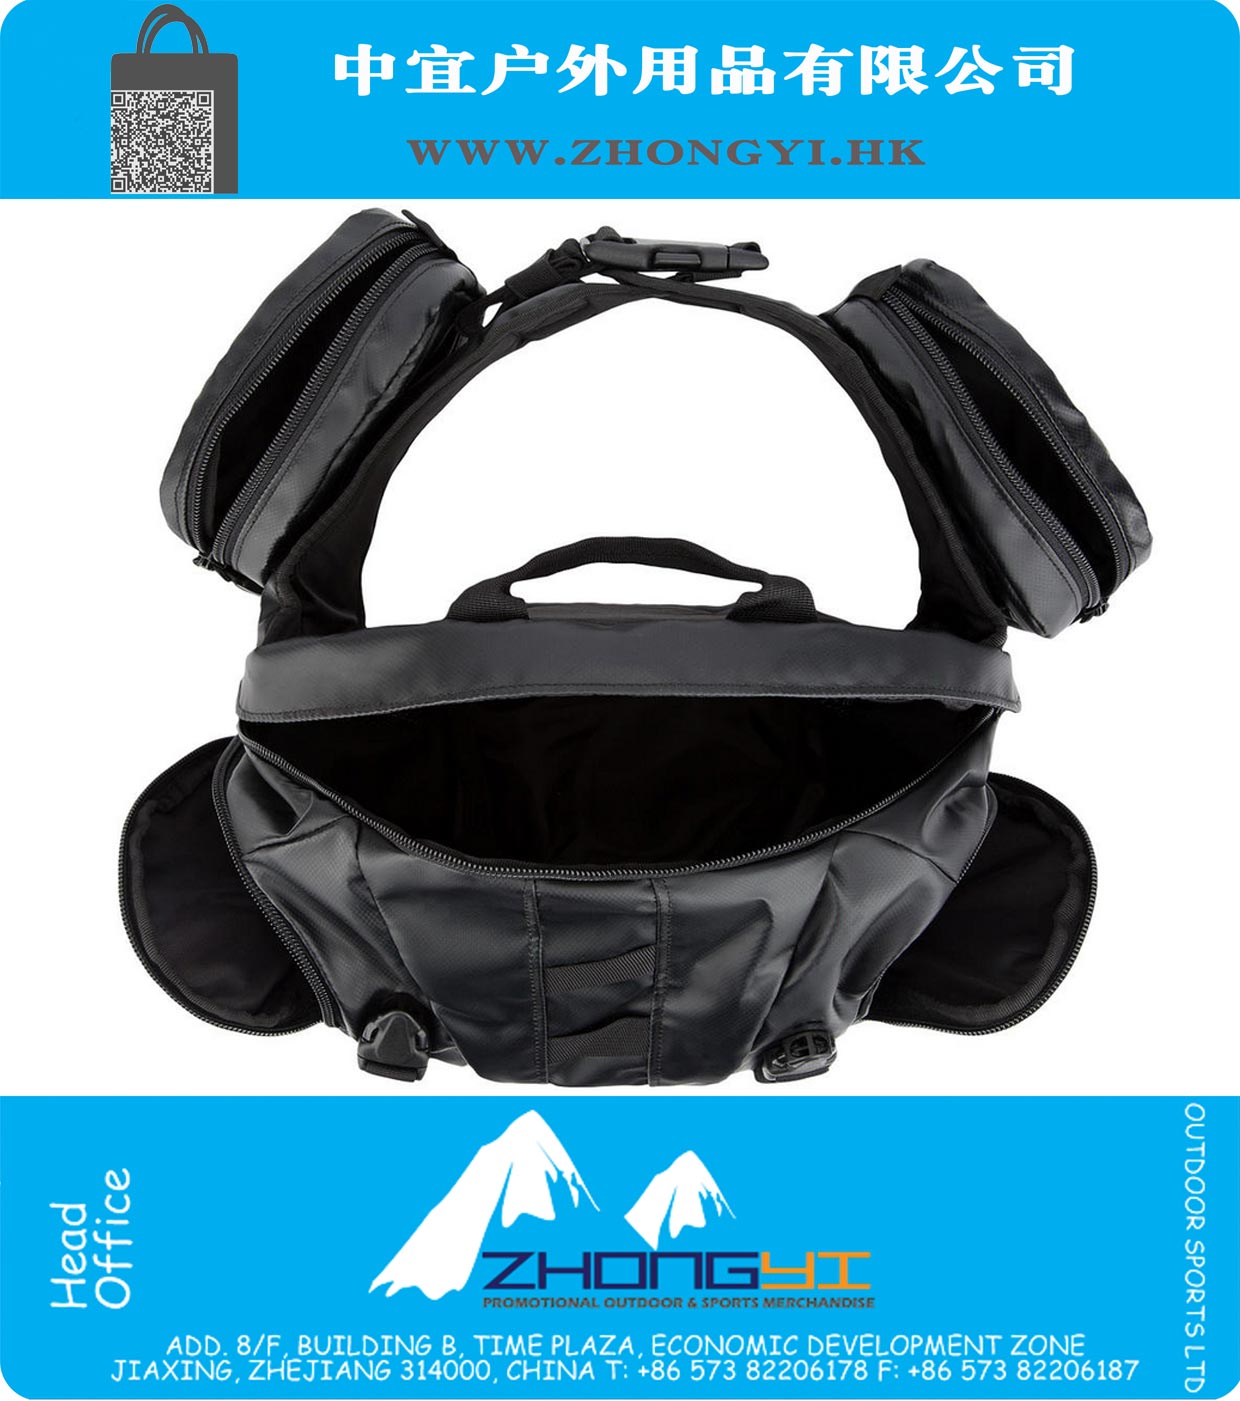 EMS Fanny Pack, ZY-TLEC018, EMT Trauma Kits, EMT Bags, China, Manufacturer | Zhongyi Bags